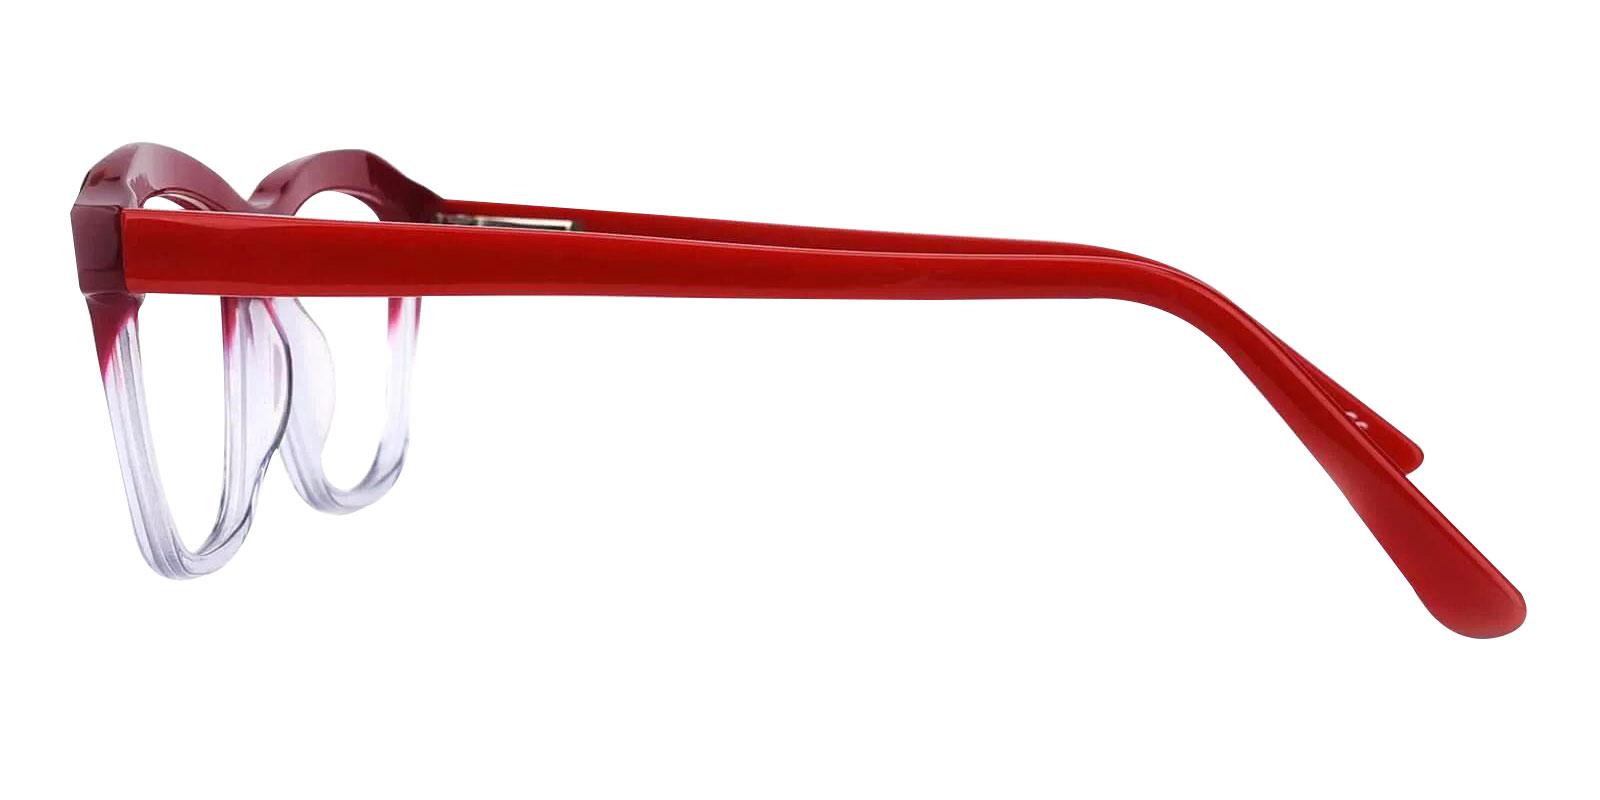 Sonia Red Acetate Eyeglasses , SpringHinges , UniversalBridgeFit Frames from ABBE Glasses